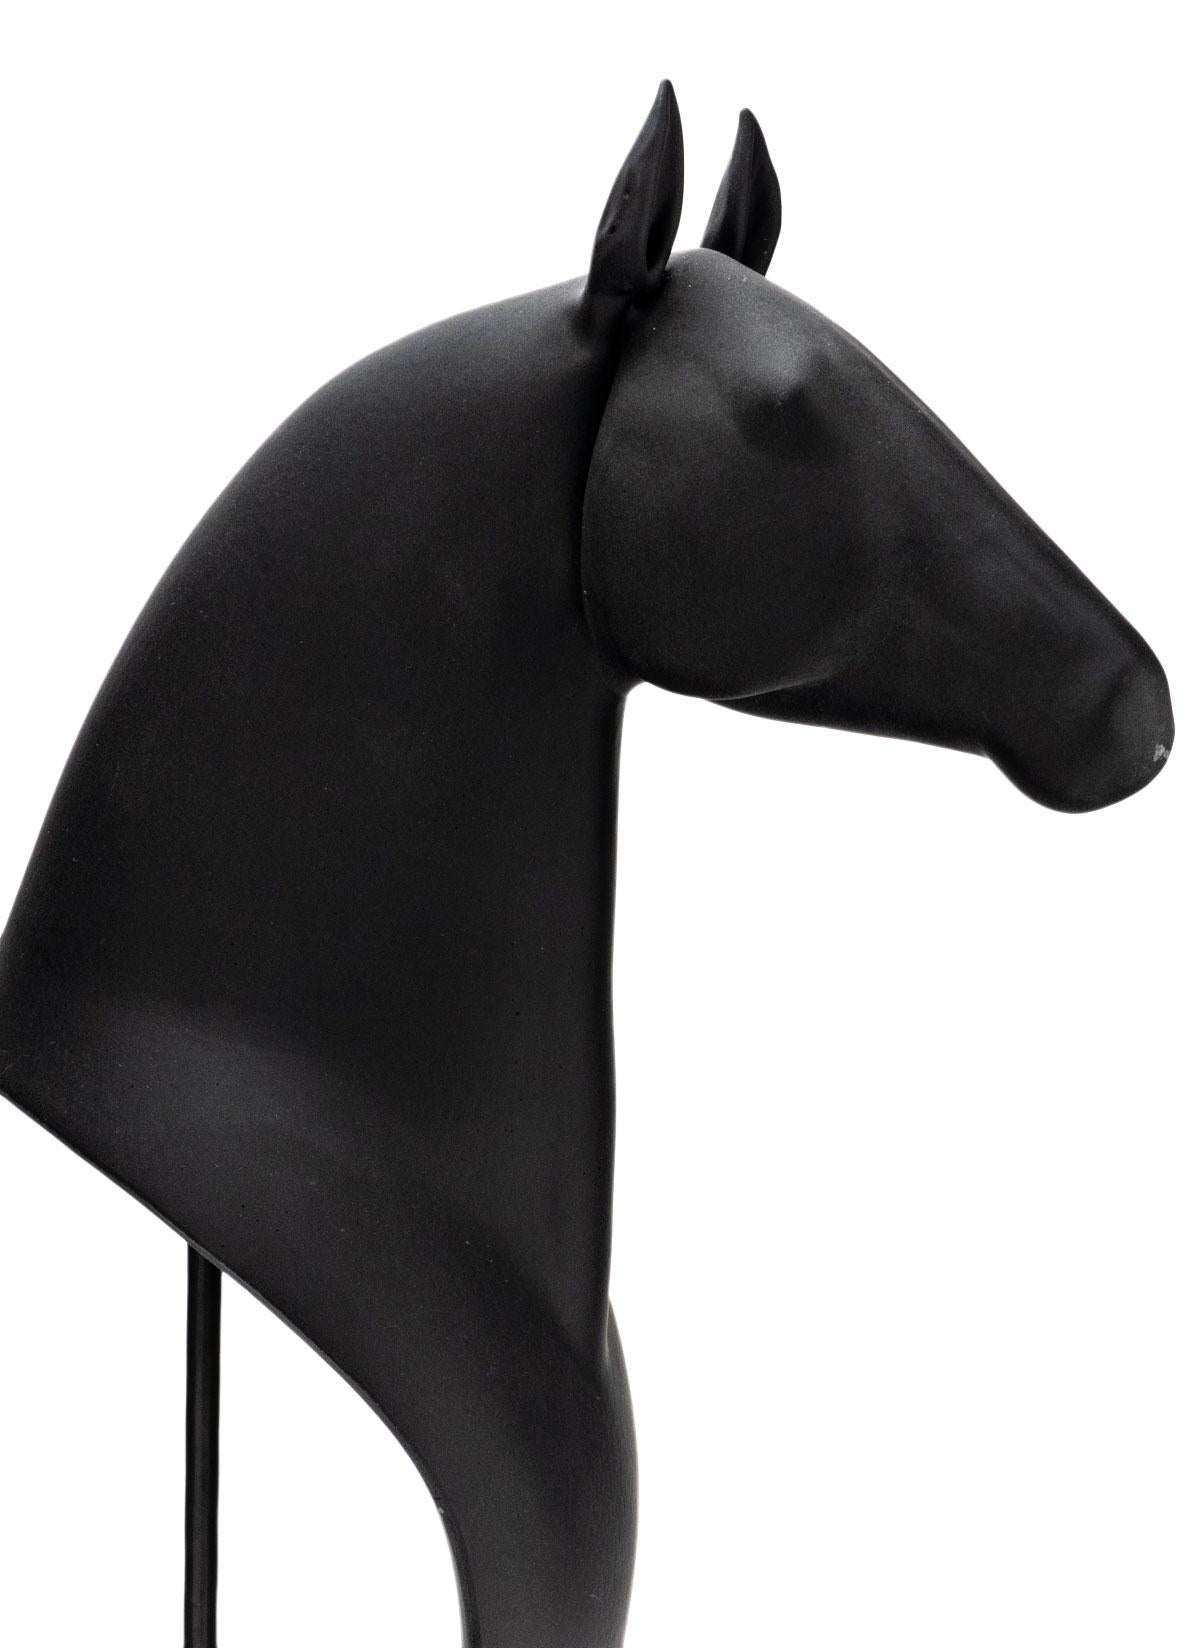 Jane's Horse (Negrita) - Black Figurative Sculpture by Ross Richmond